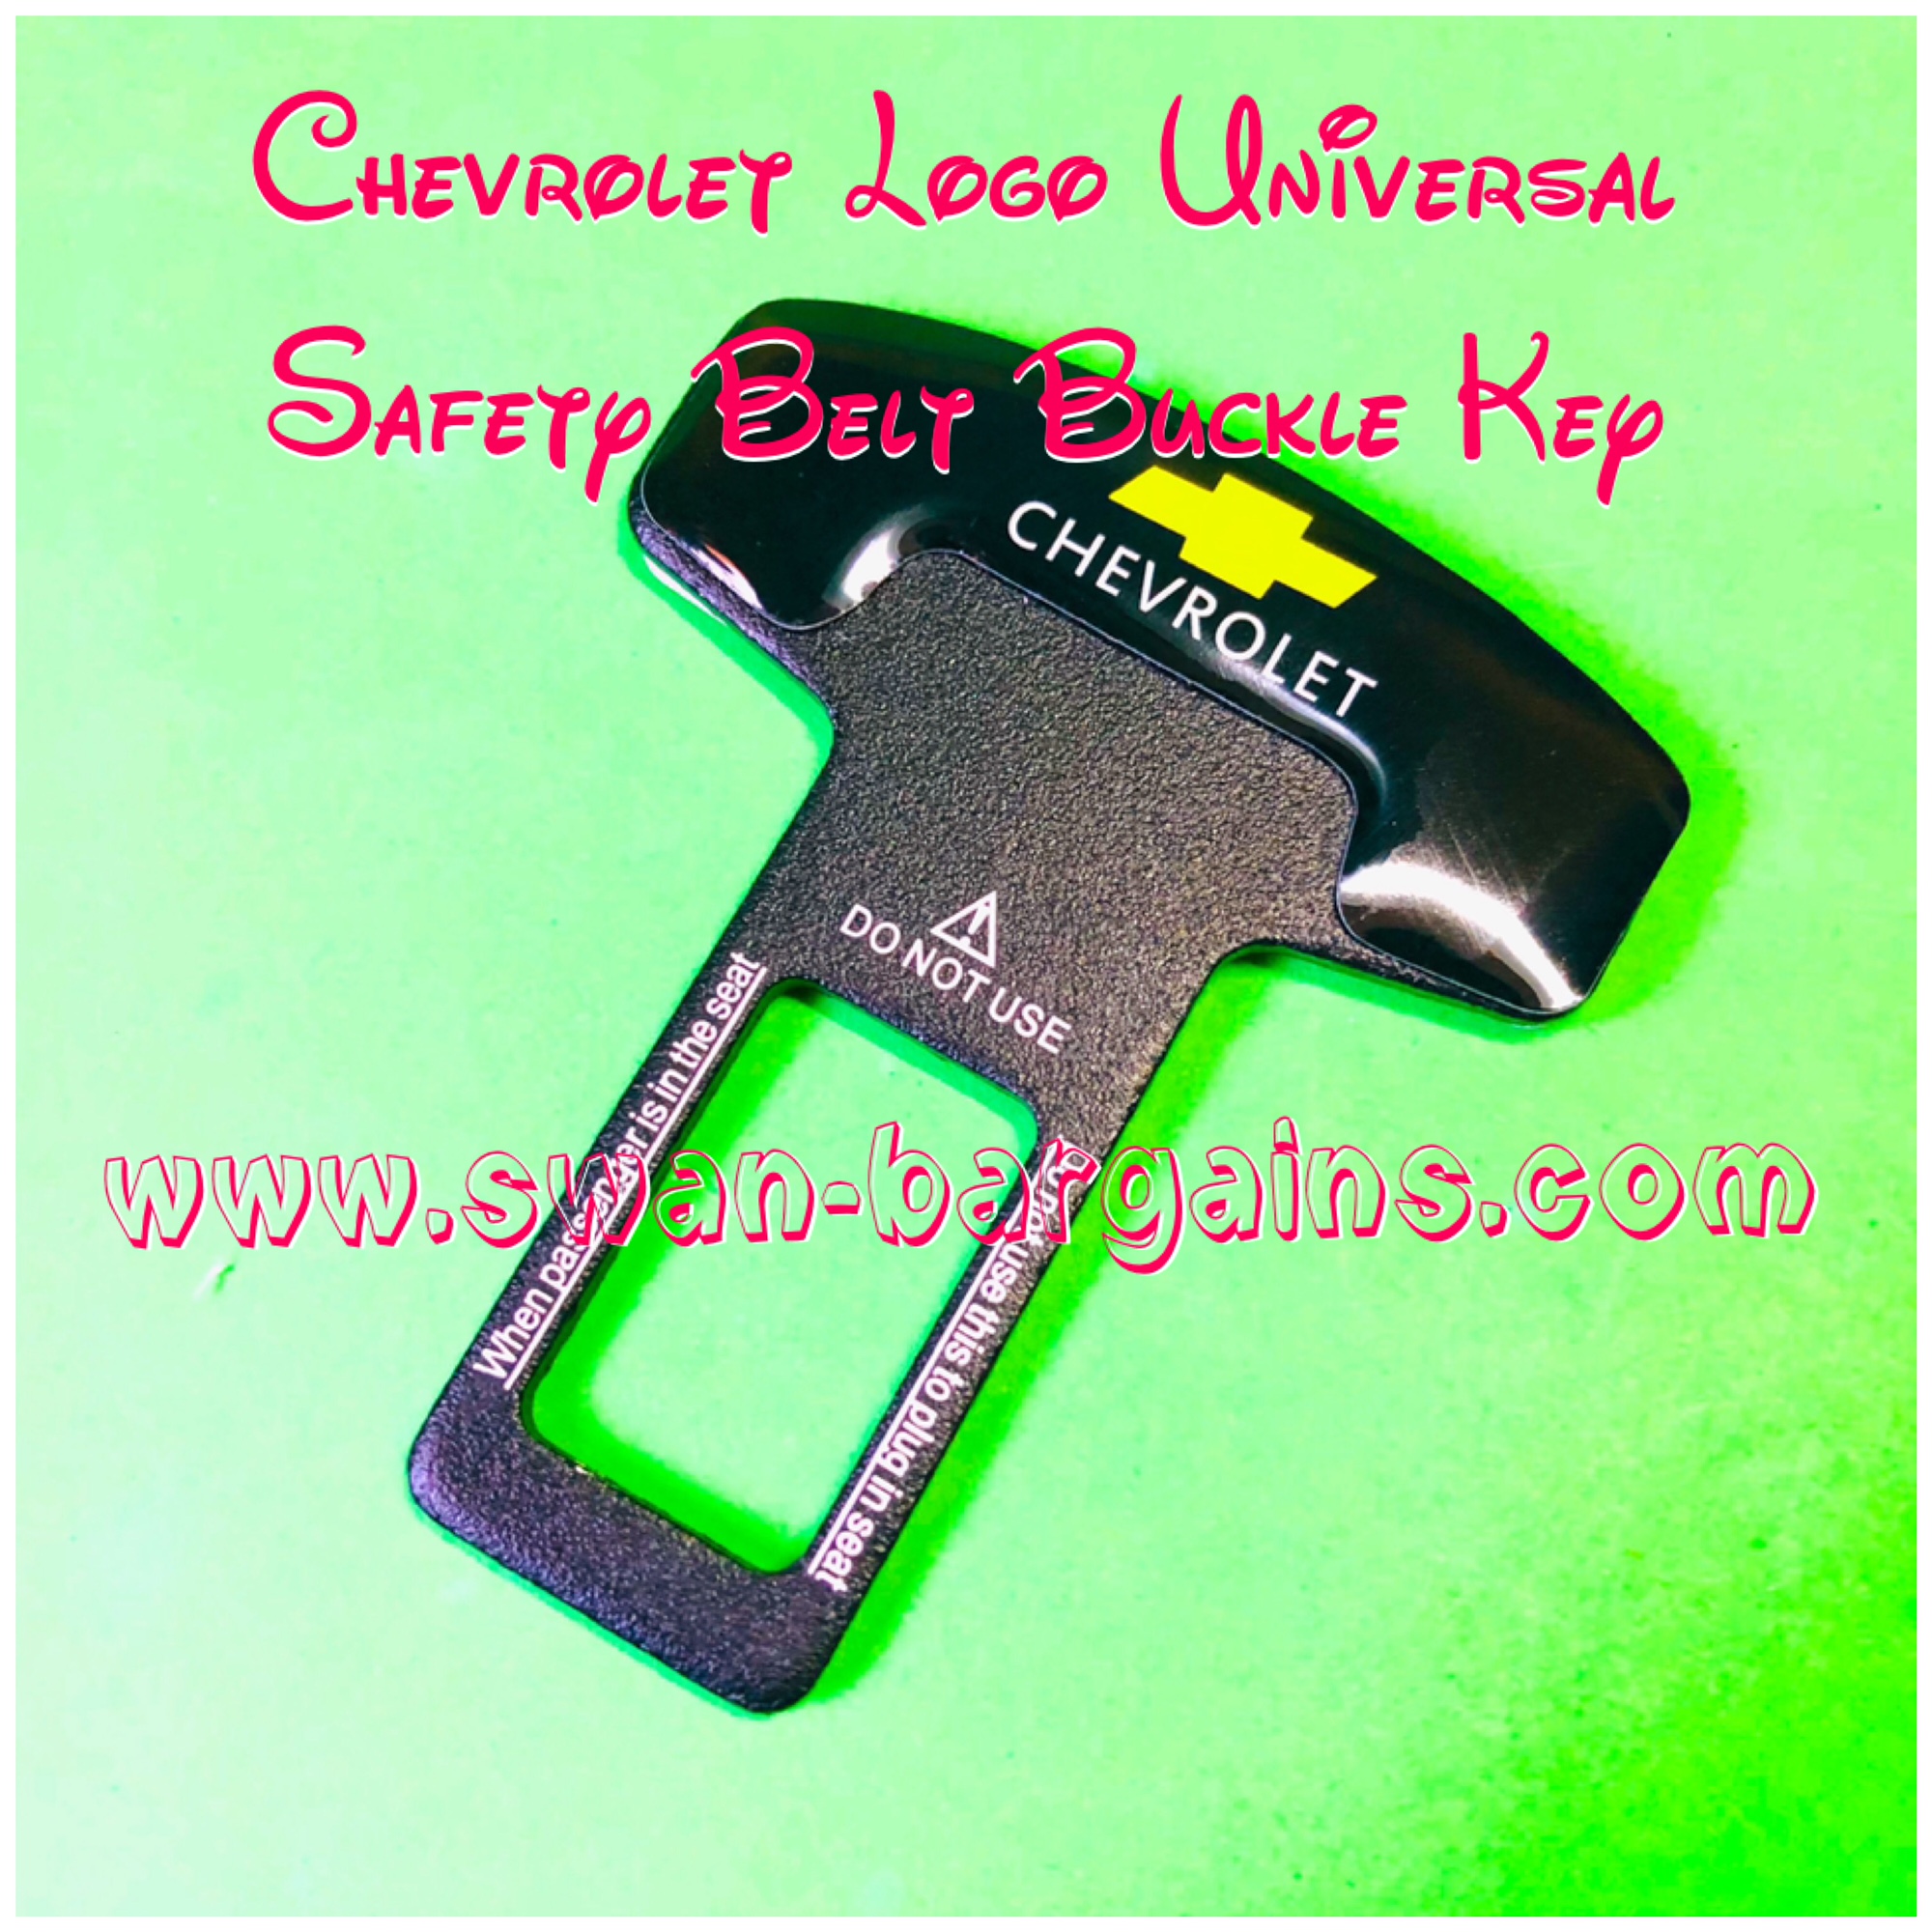 Universal Car Safety Belt Buckle Key Singapore - Chevrolet